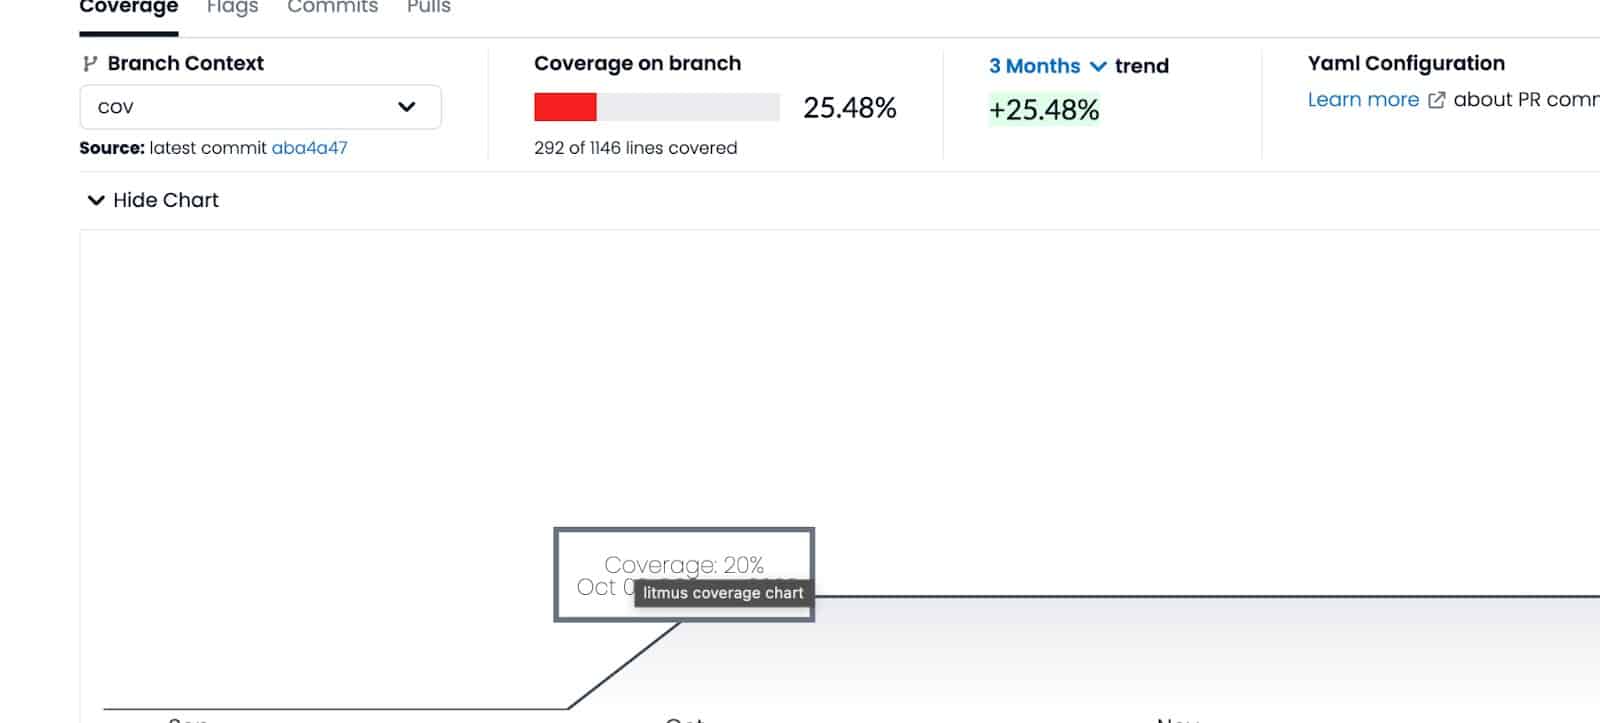 Screenshot showing litmus coverage chart at 20%